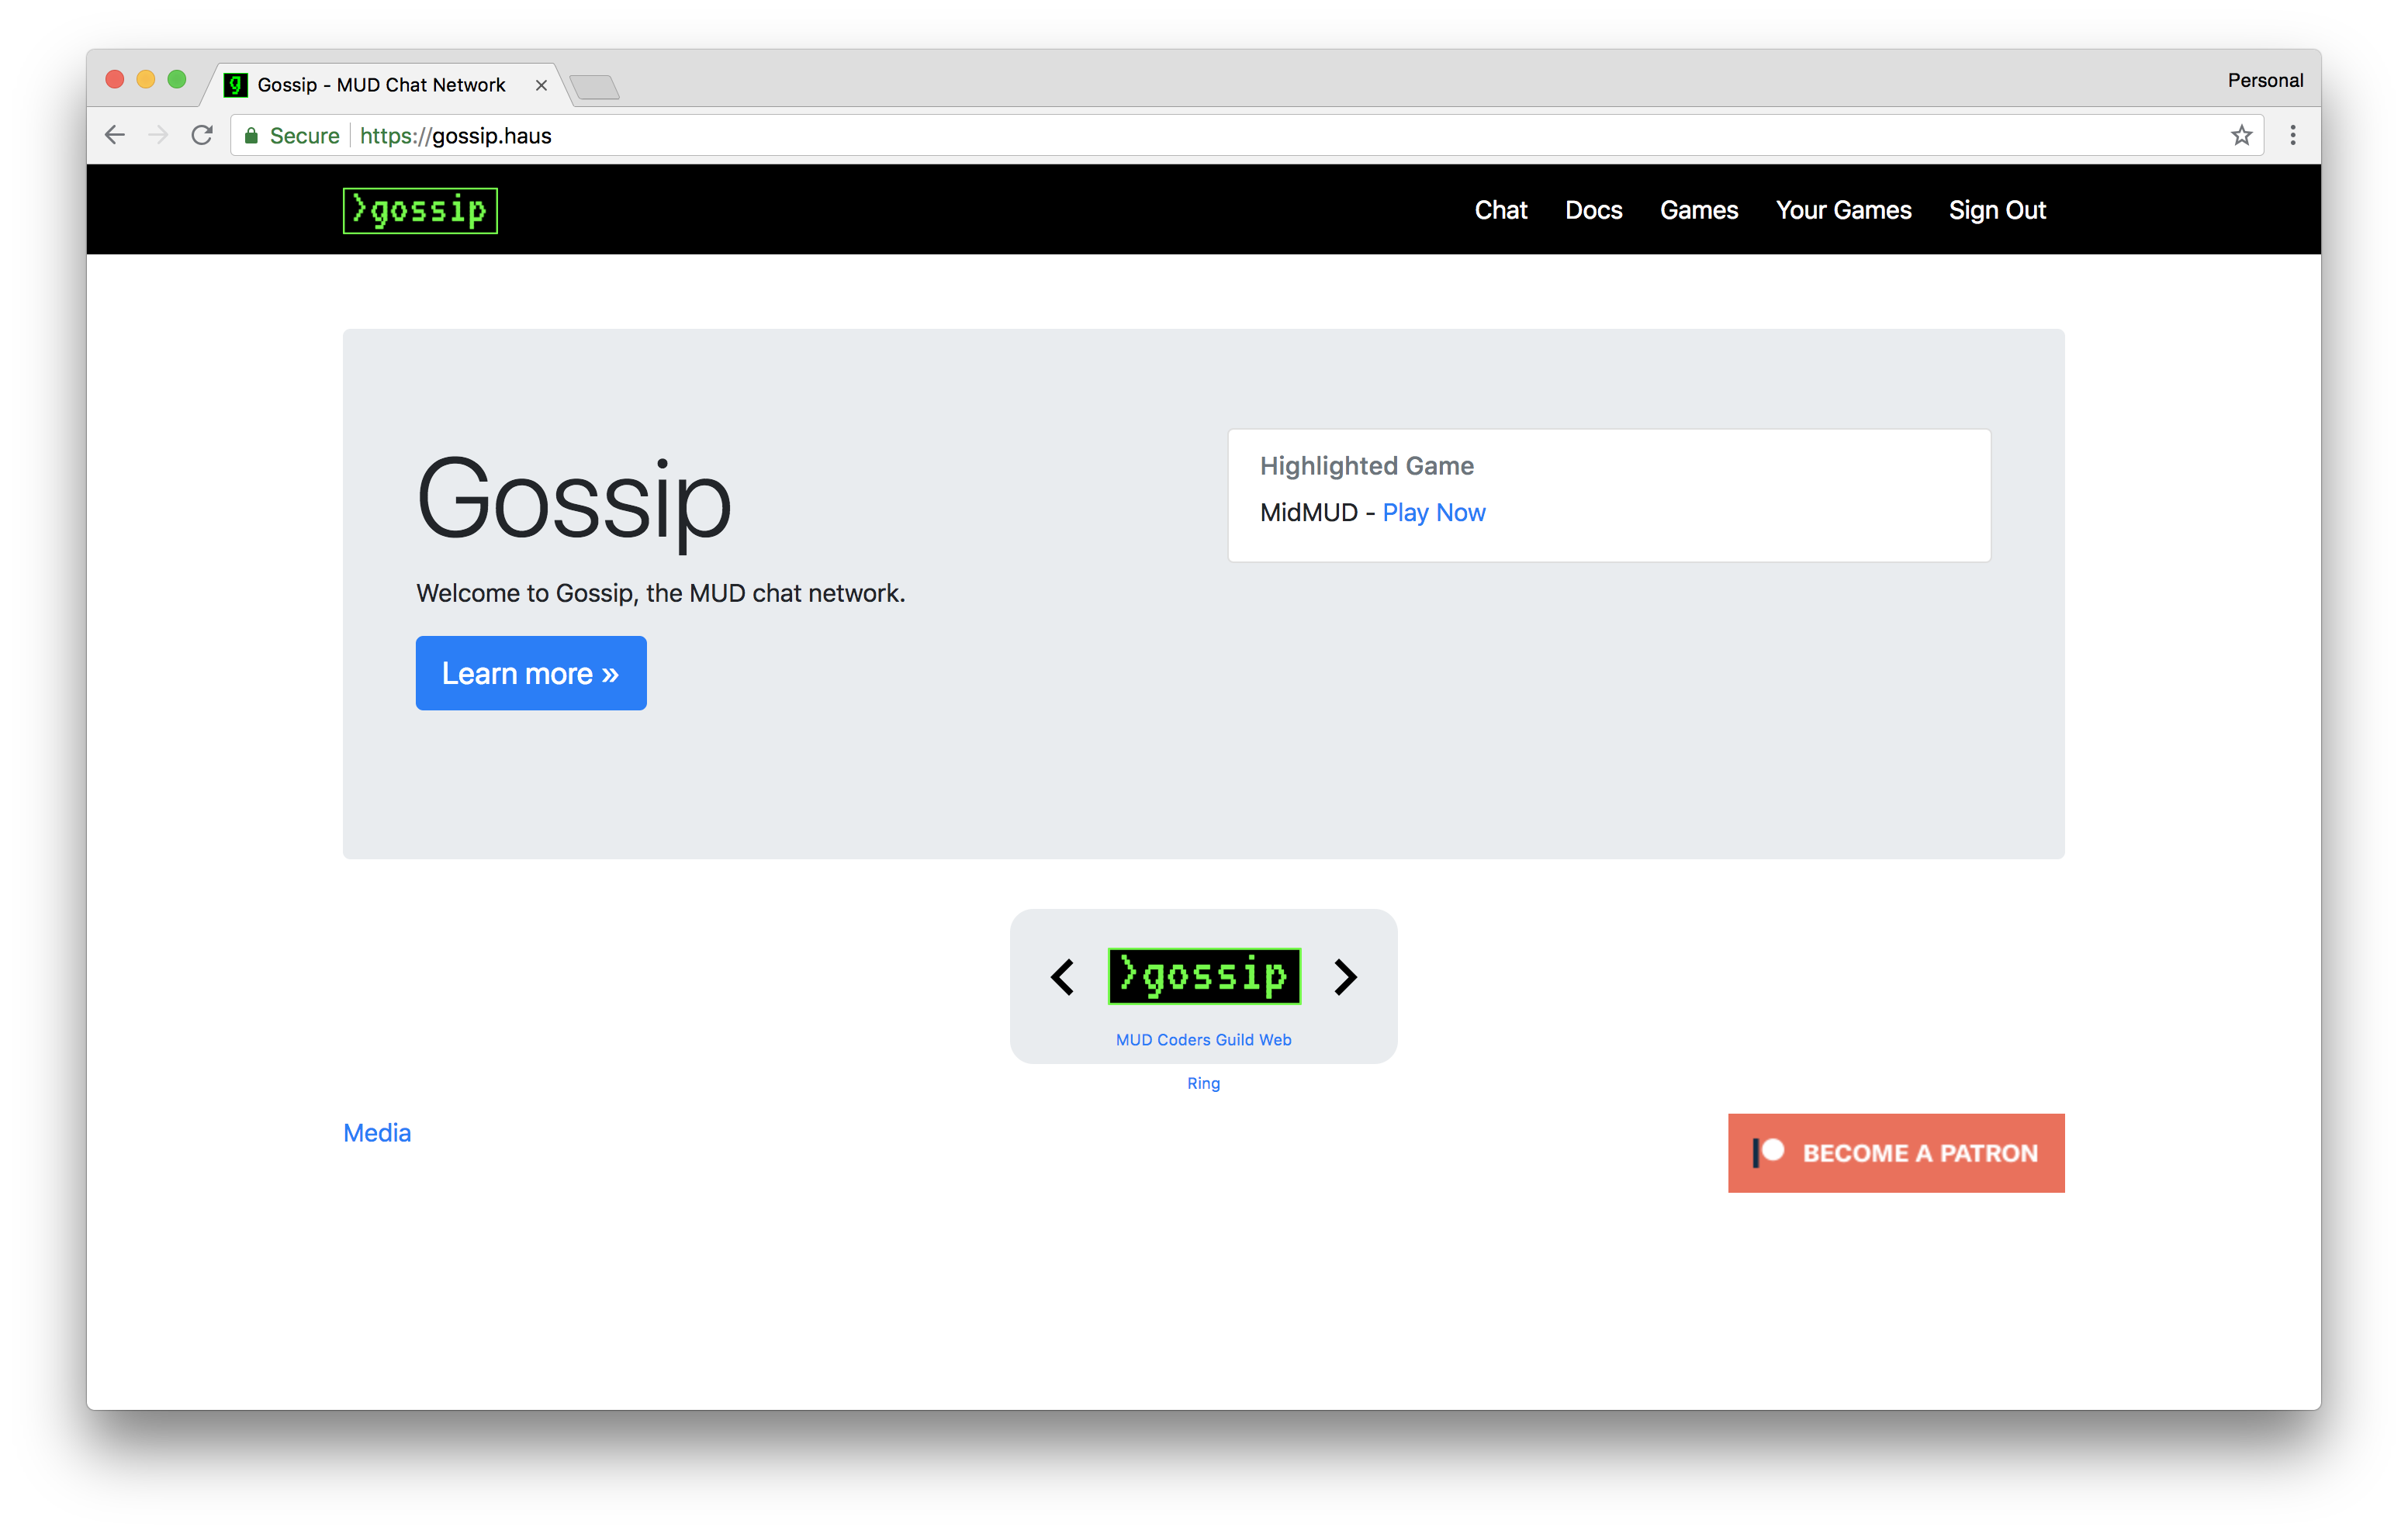 Gossip Homepage